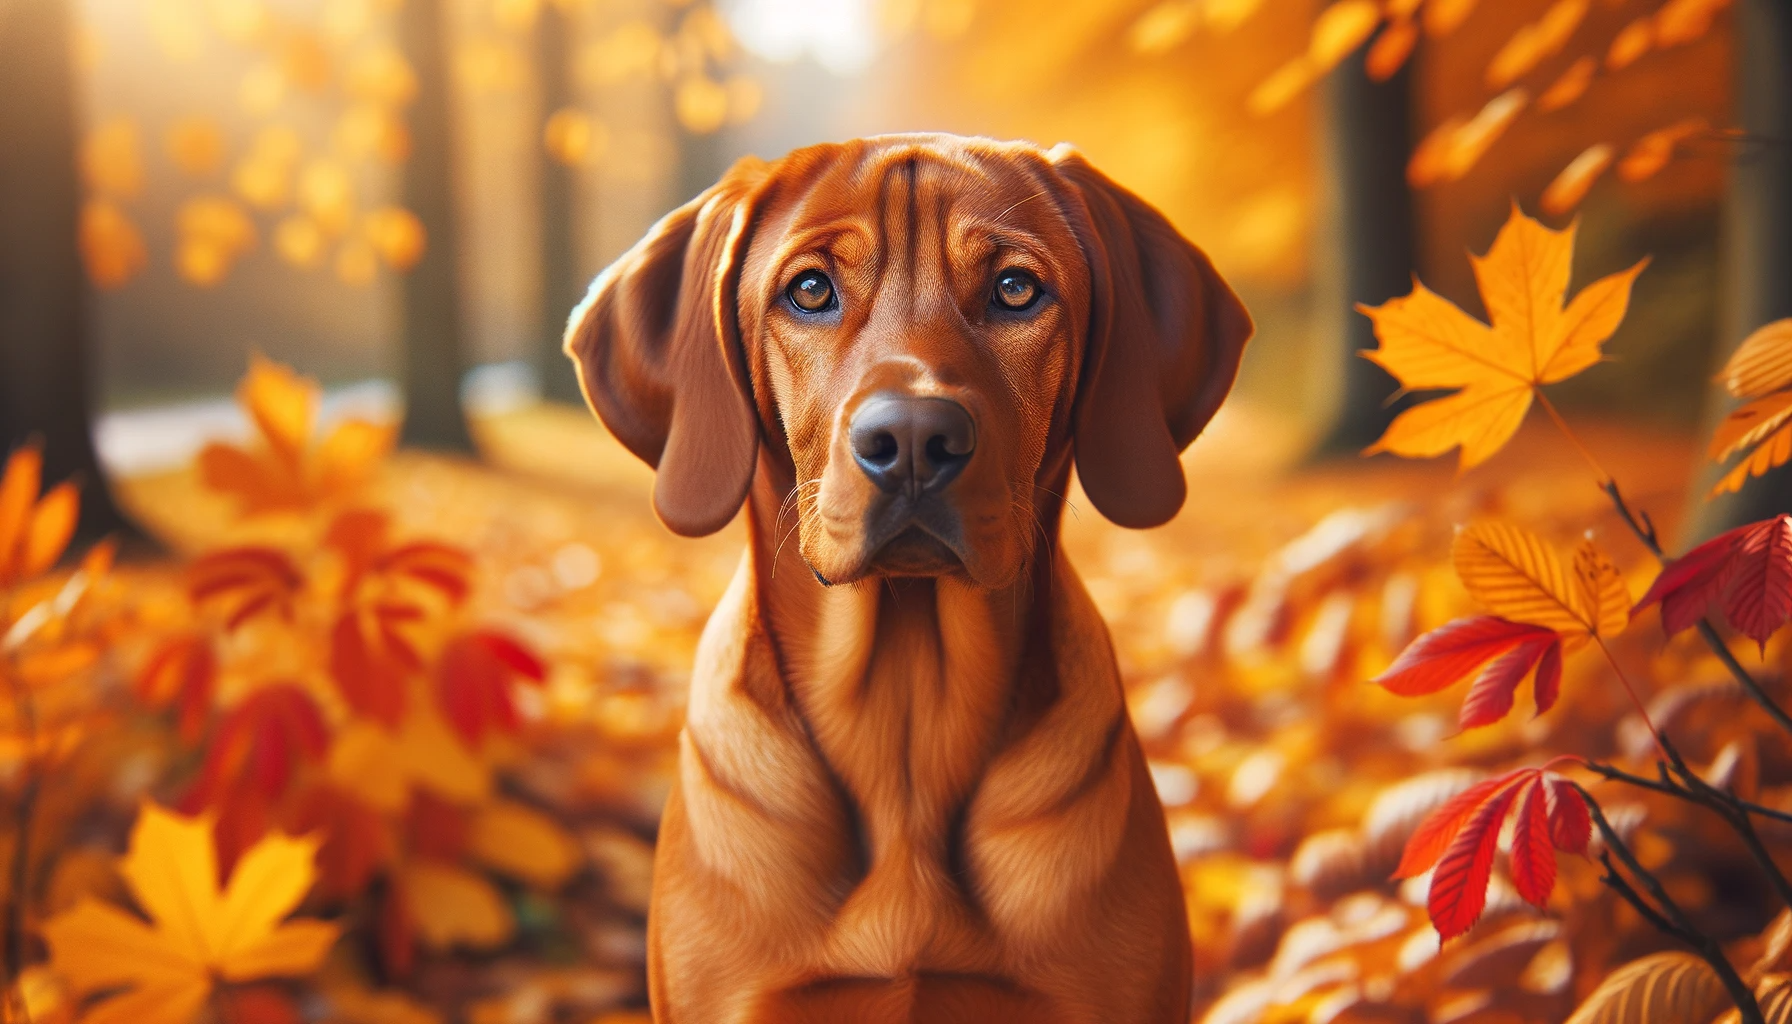 A Redbone Coonhound Lab Mix Enjoying an Autumn Day, Showcasing Its Reddish-Brown Coat